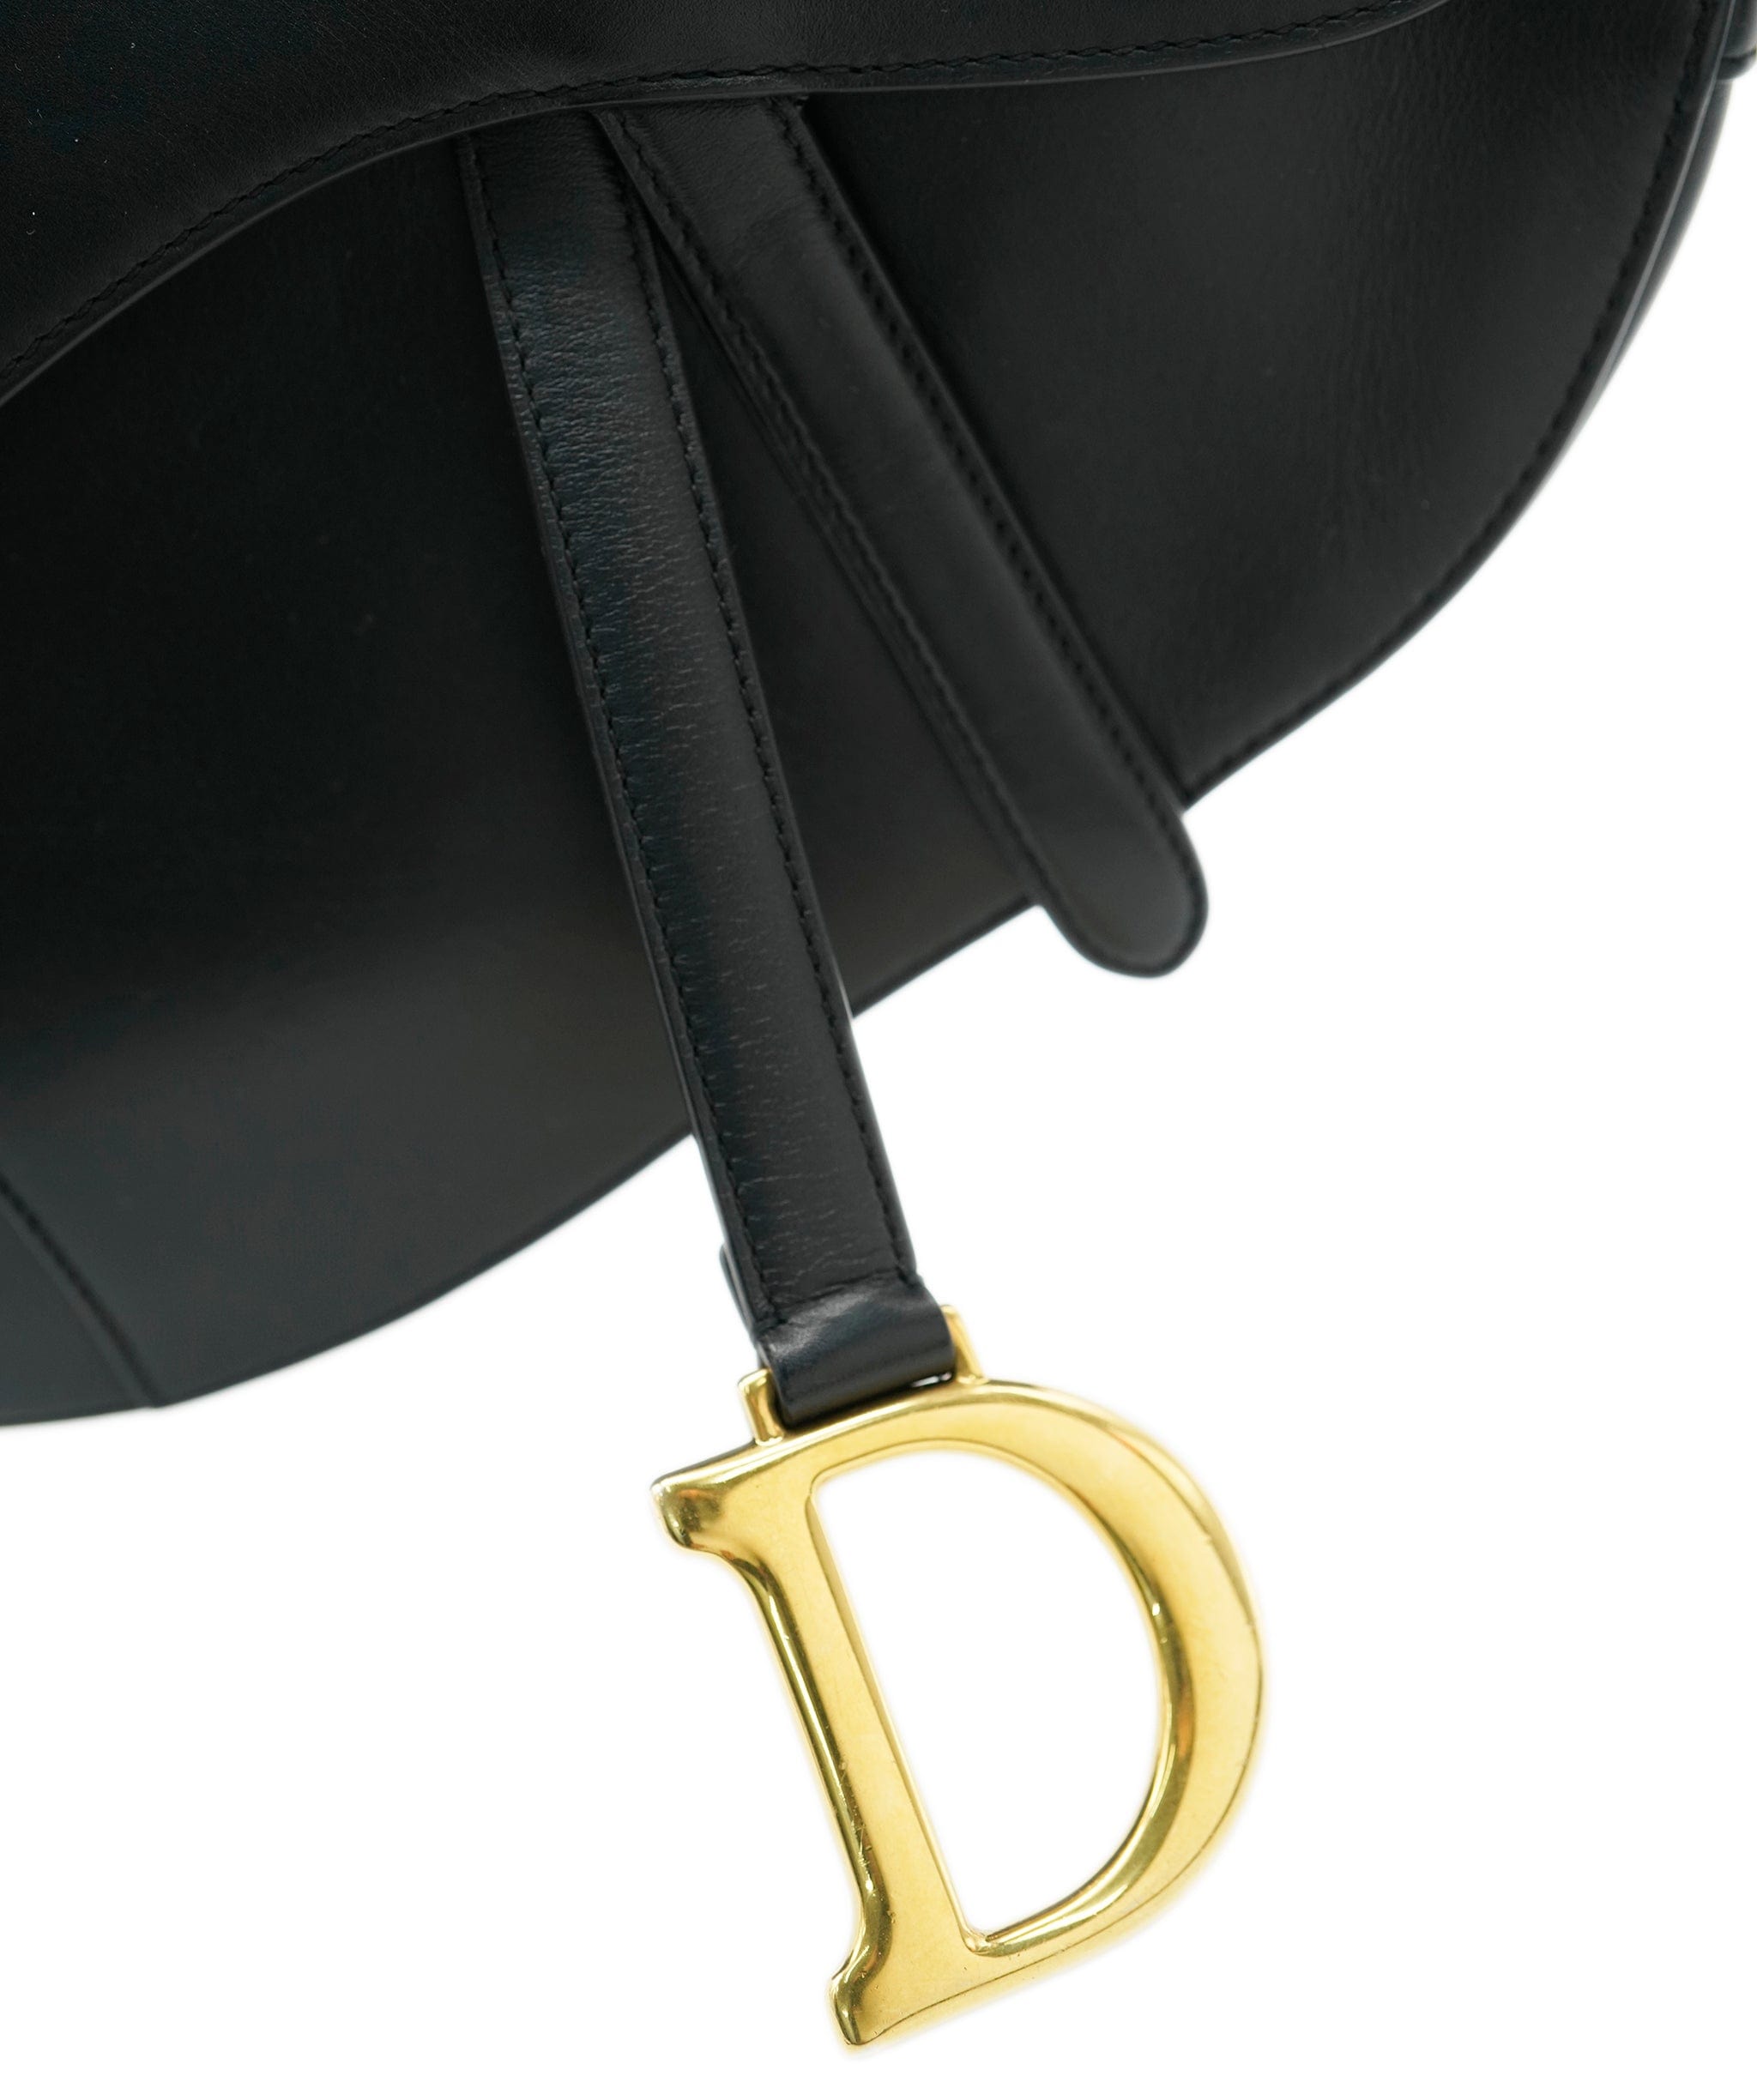 Christian Dior Christian Dior Large black Saddle with strap ALC1407